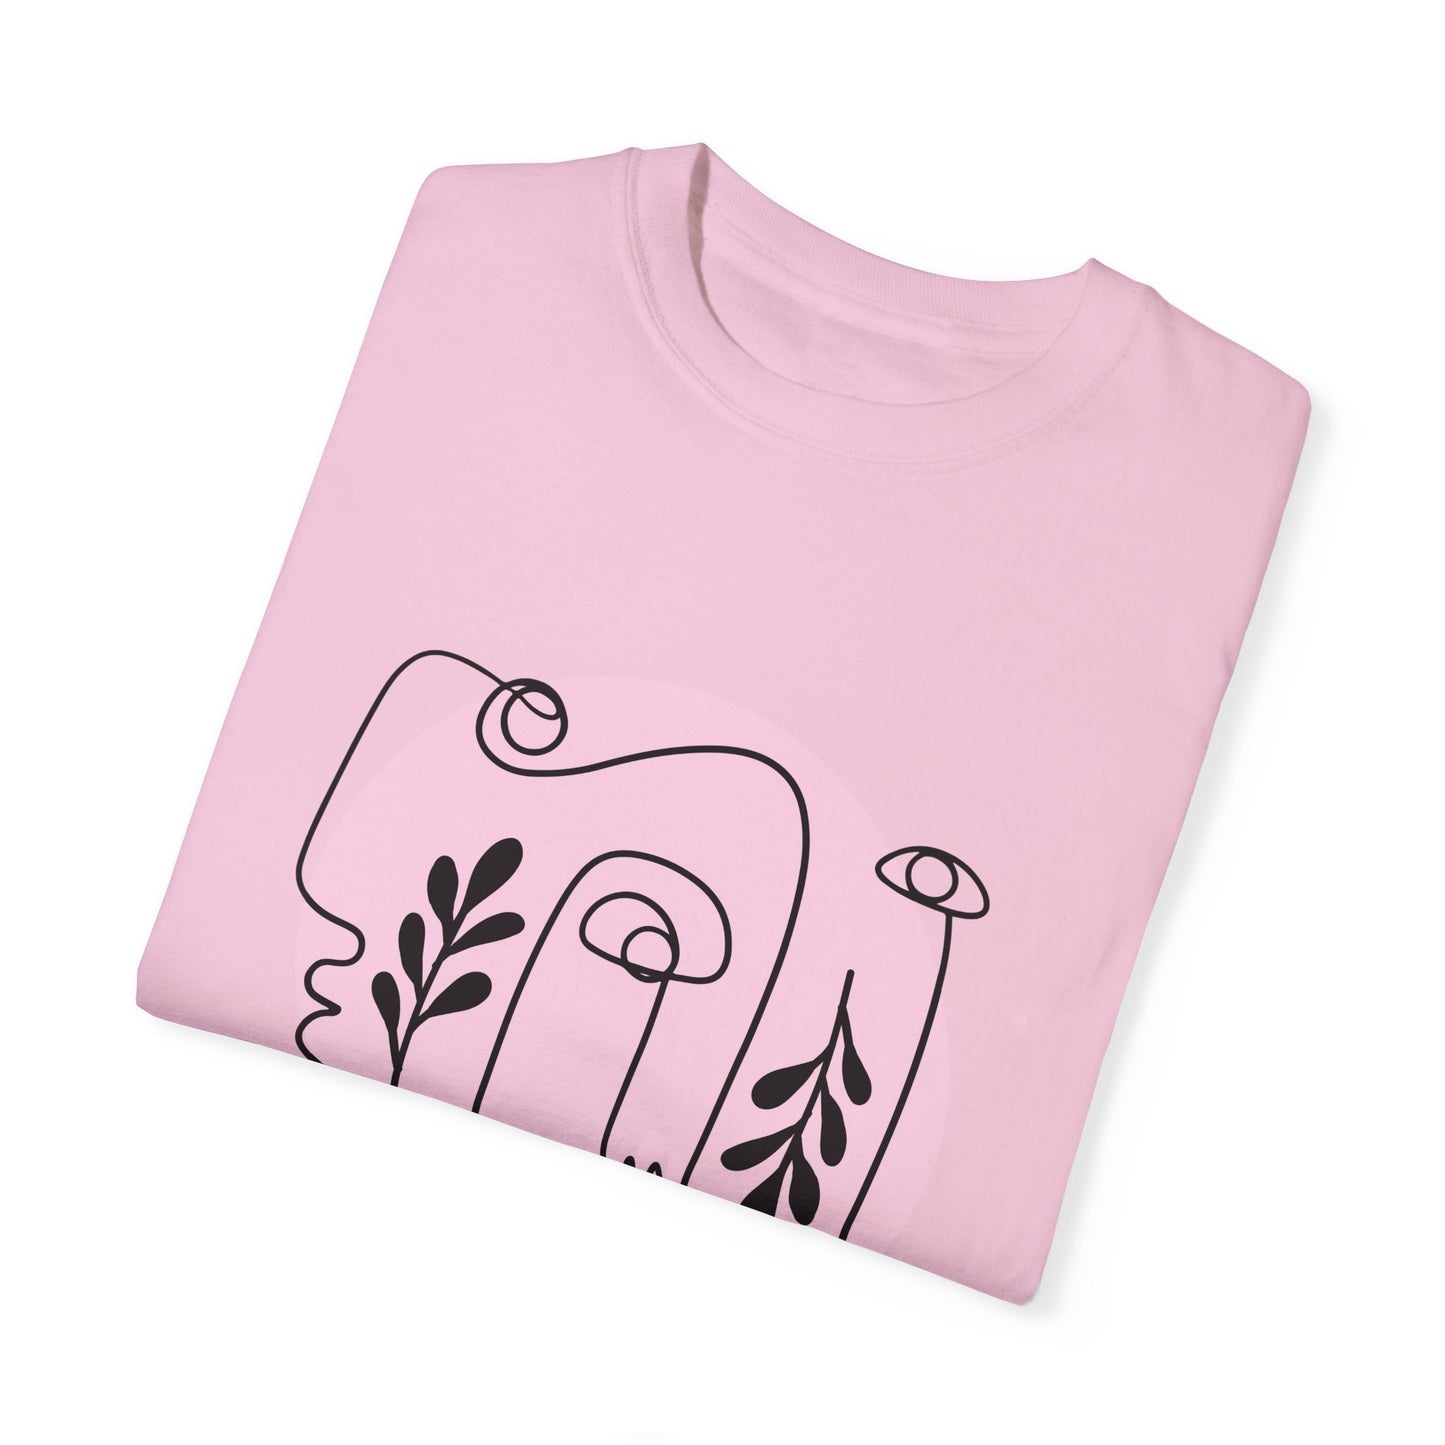 Camiseta minimalista teñida de ropa unisex de arte moderno